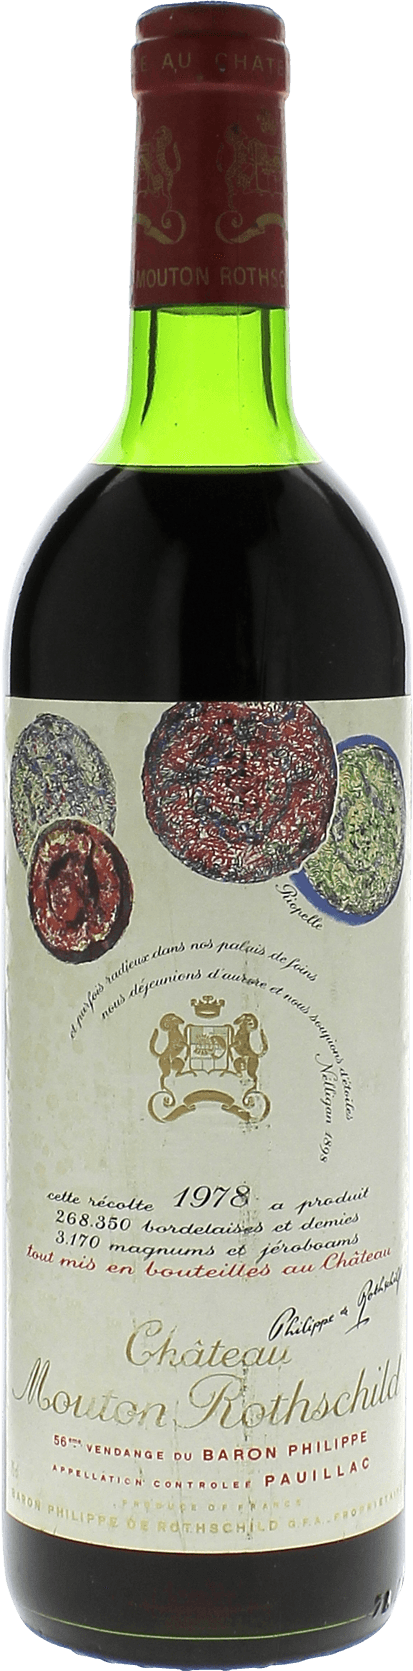 Mouton rothschild 1978 1er Grand cru class Pauillac, Bordeaux rouge